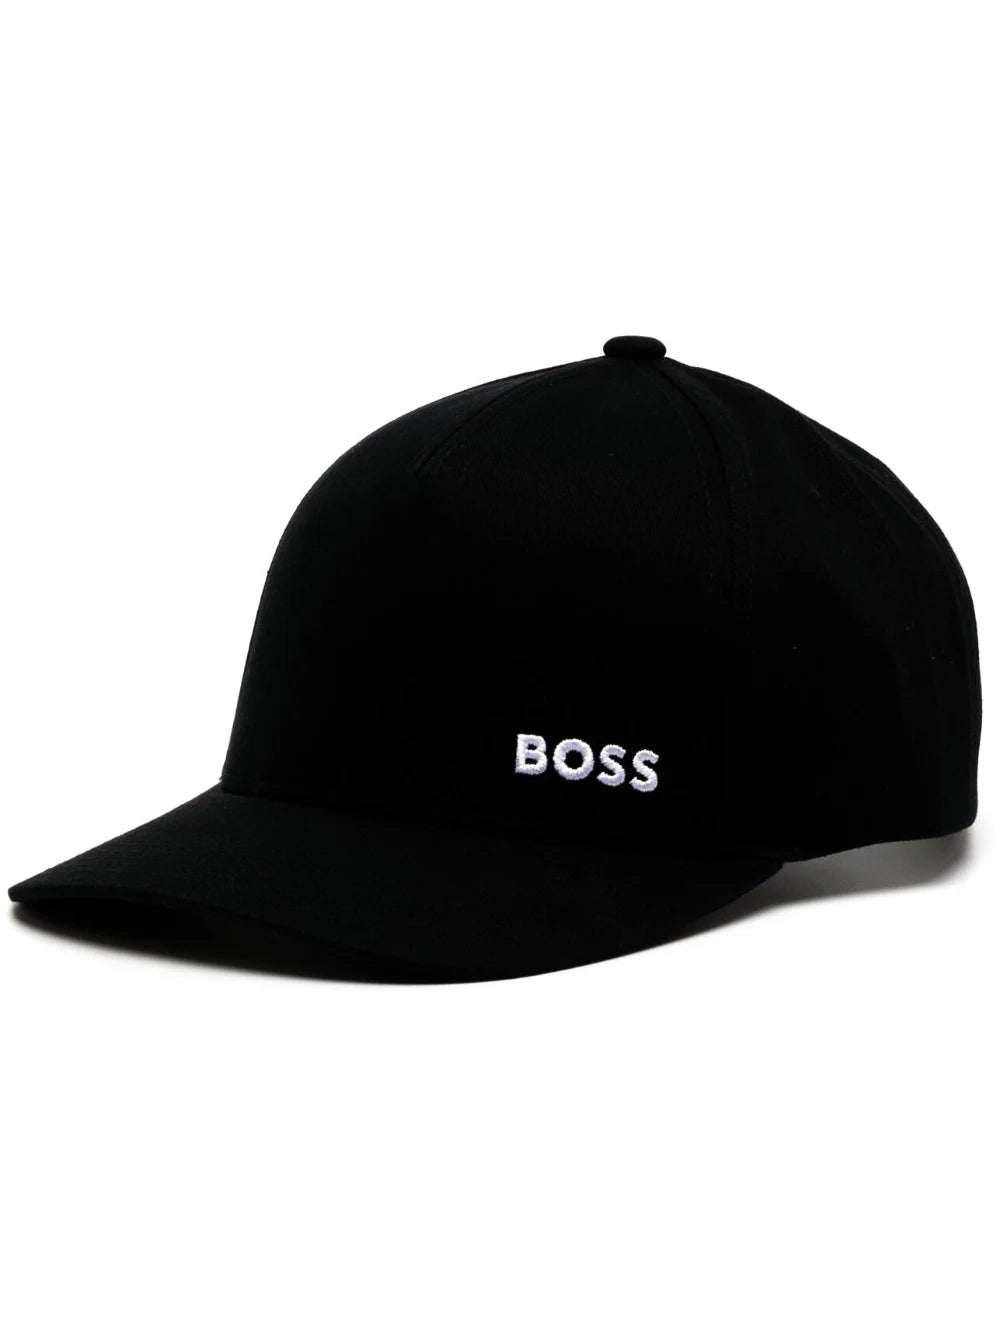 Hugo Boss Sevile Iconic Cap - Black